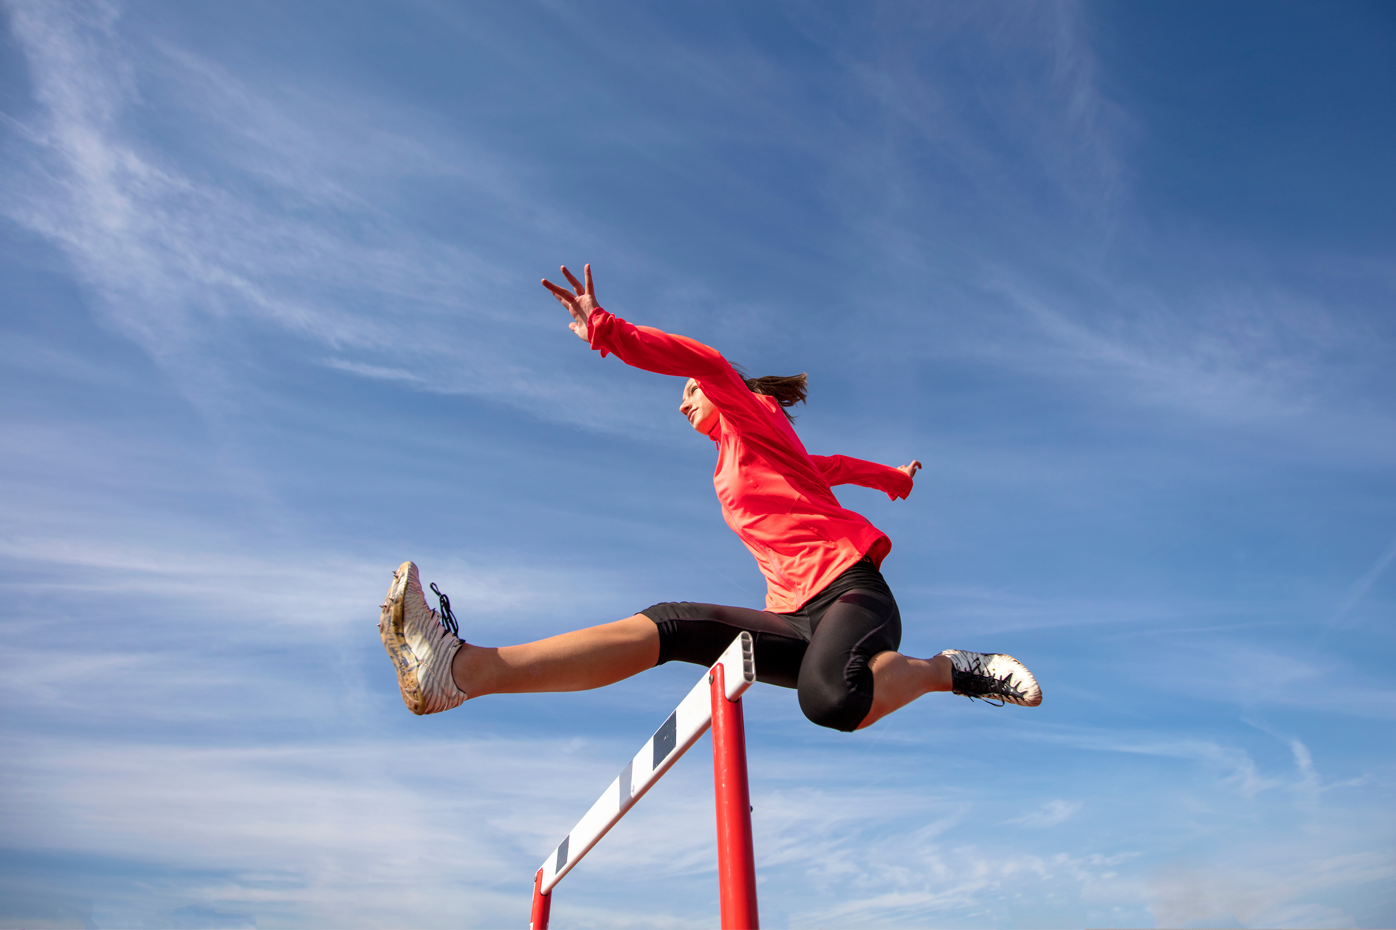 A female athlete soars over a single hurdle